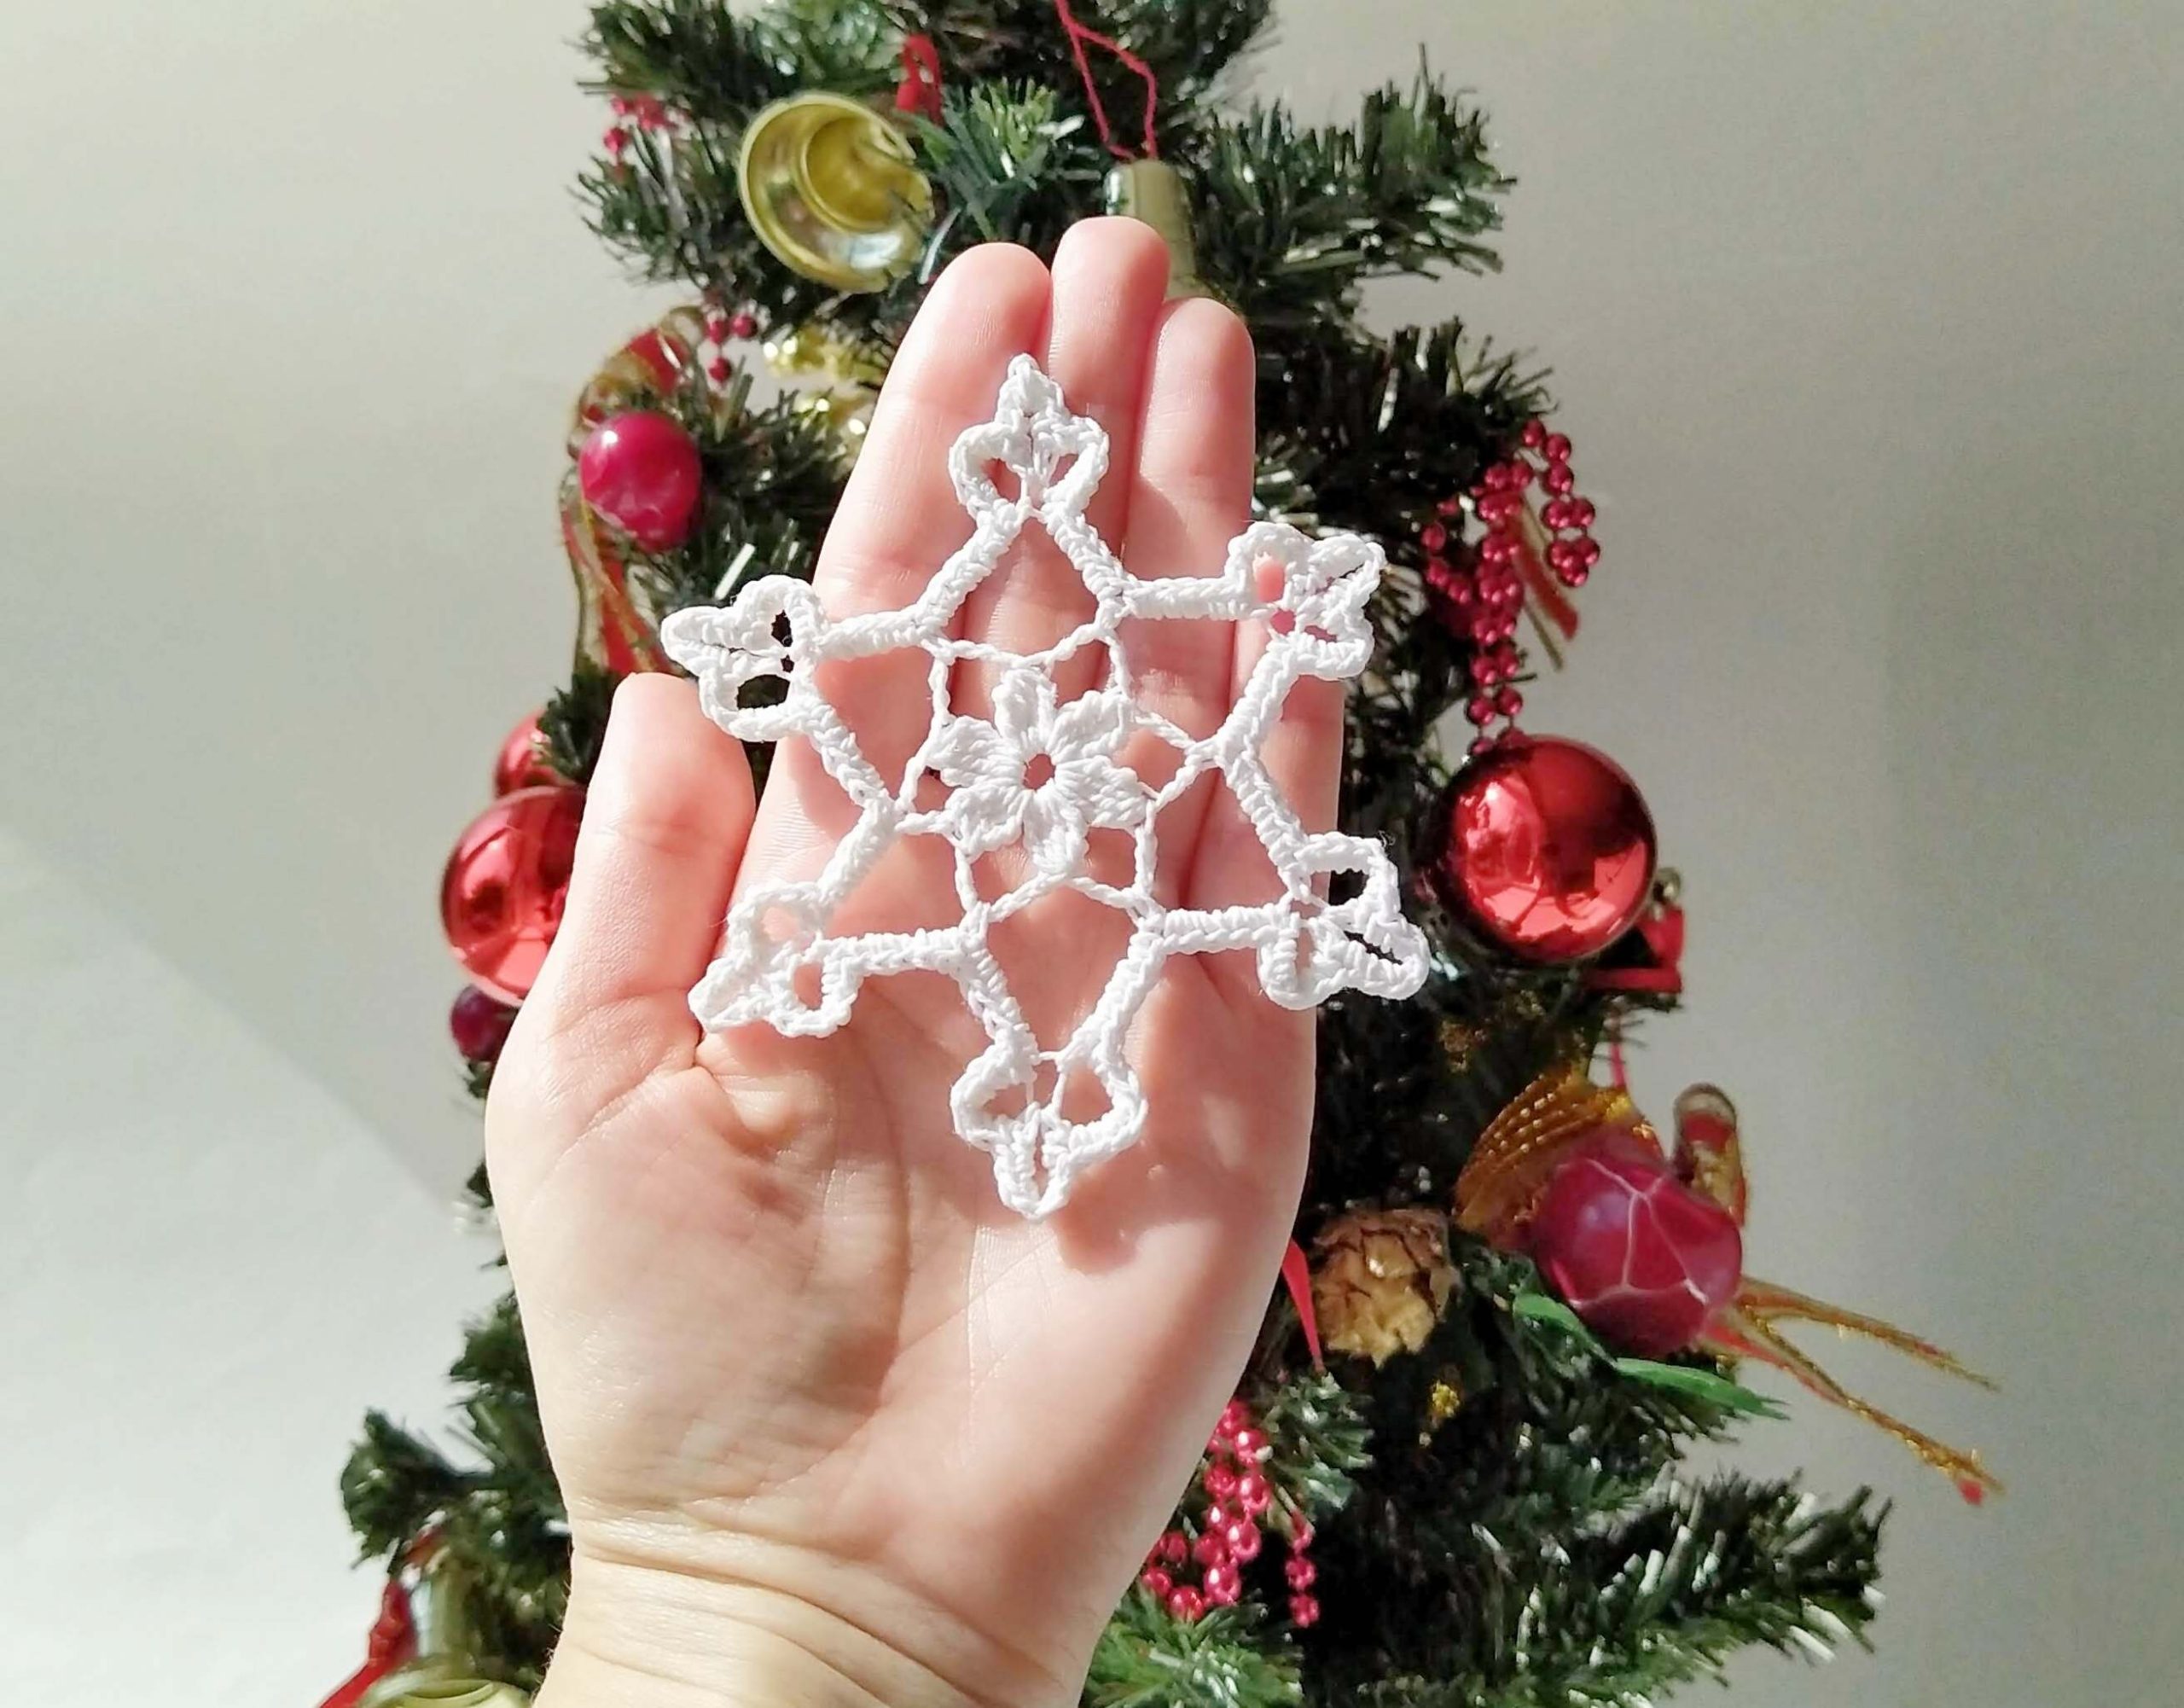 Small Snowflake Ornaments